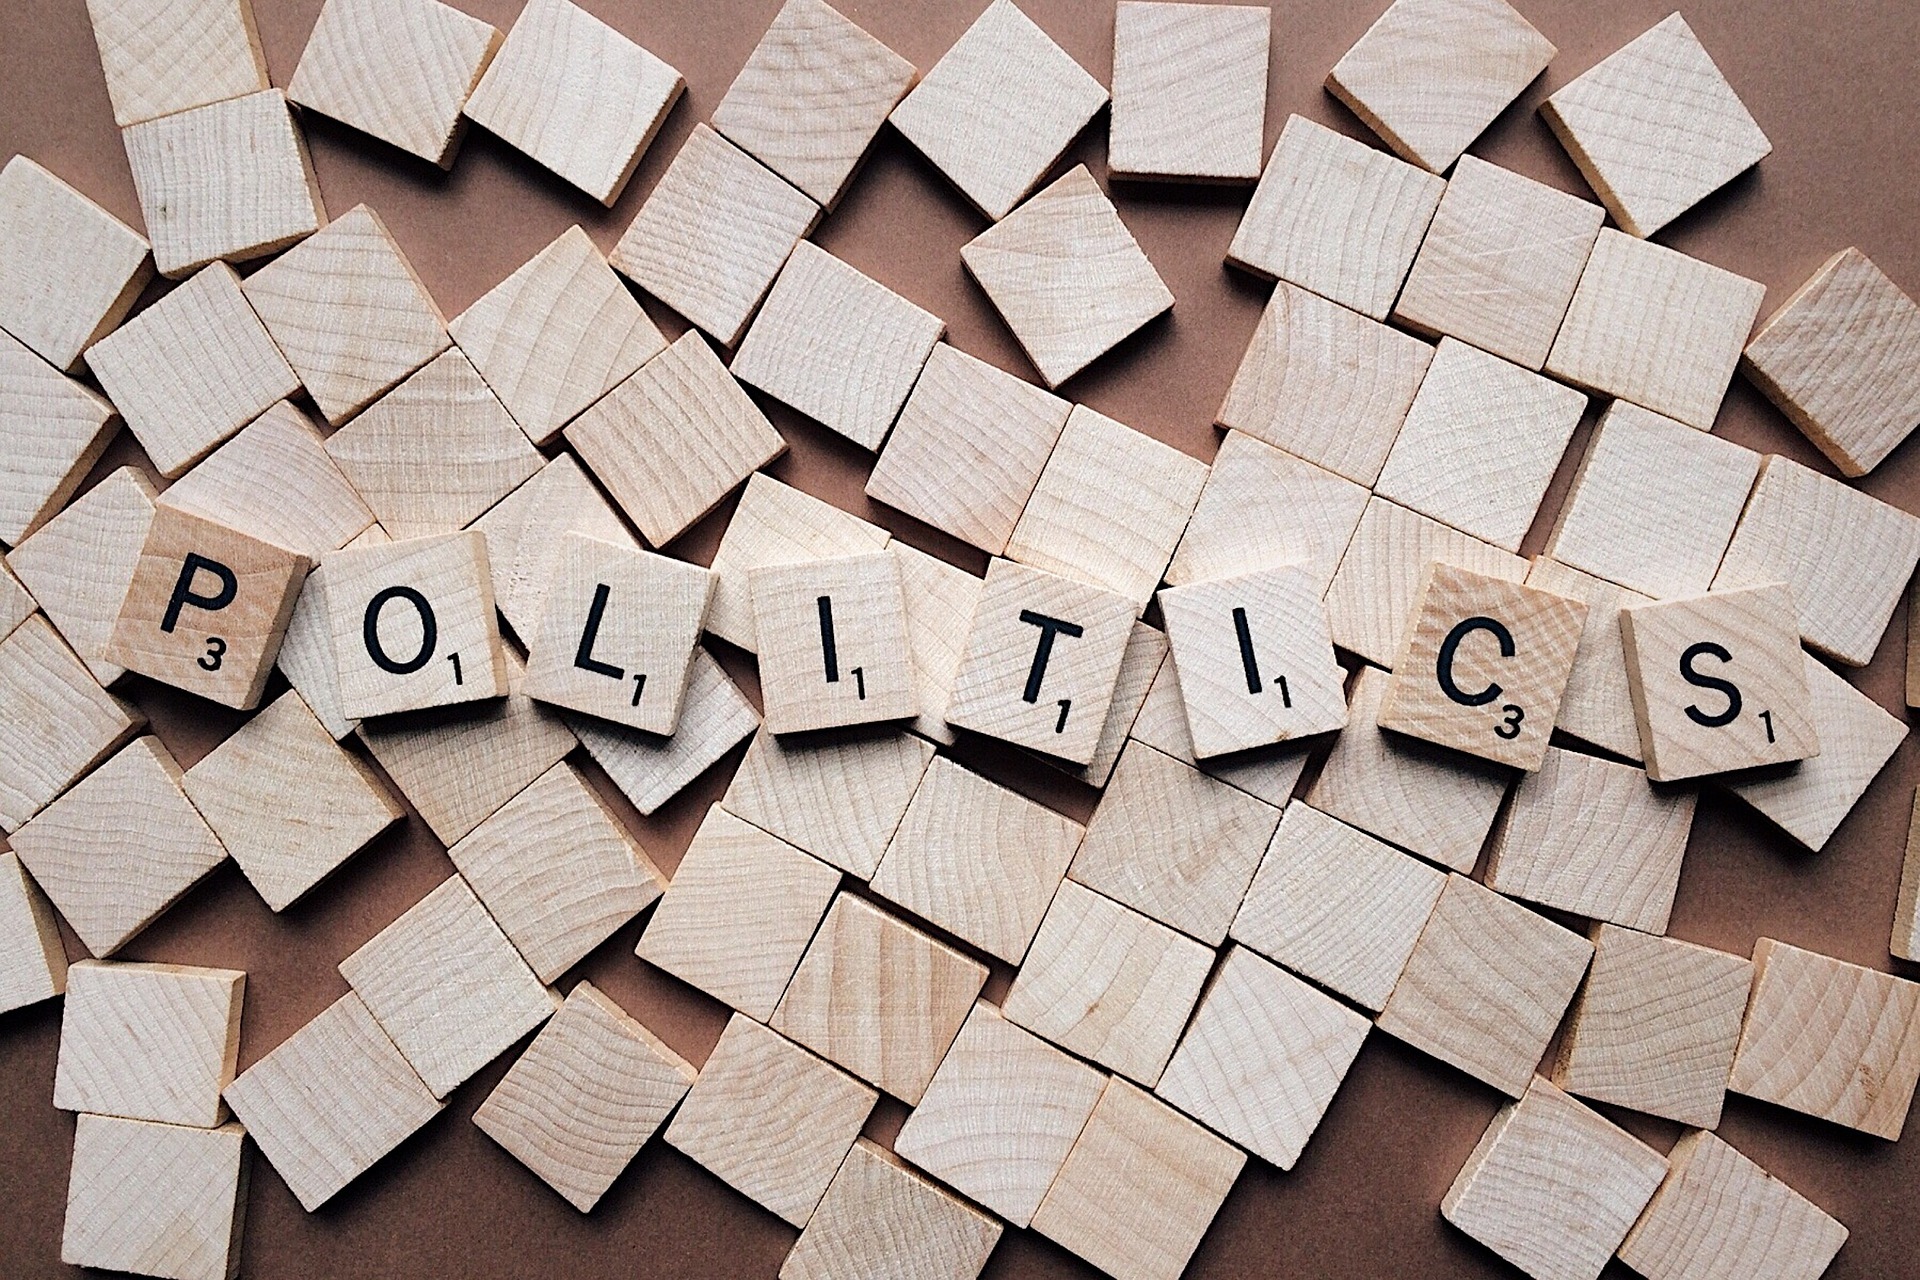 Scrabble tiles spelling "Politics"